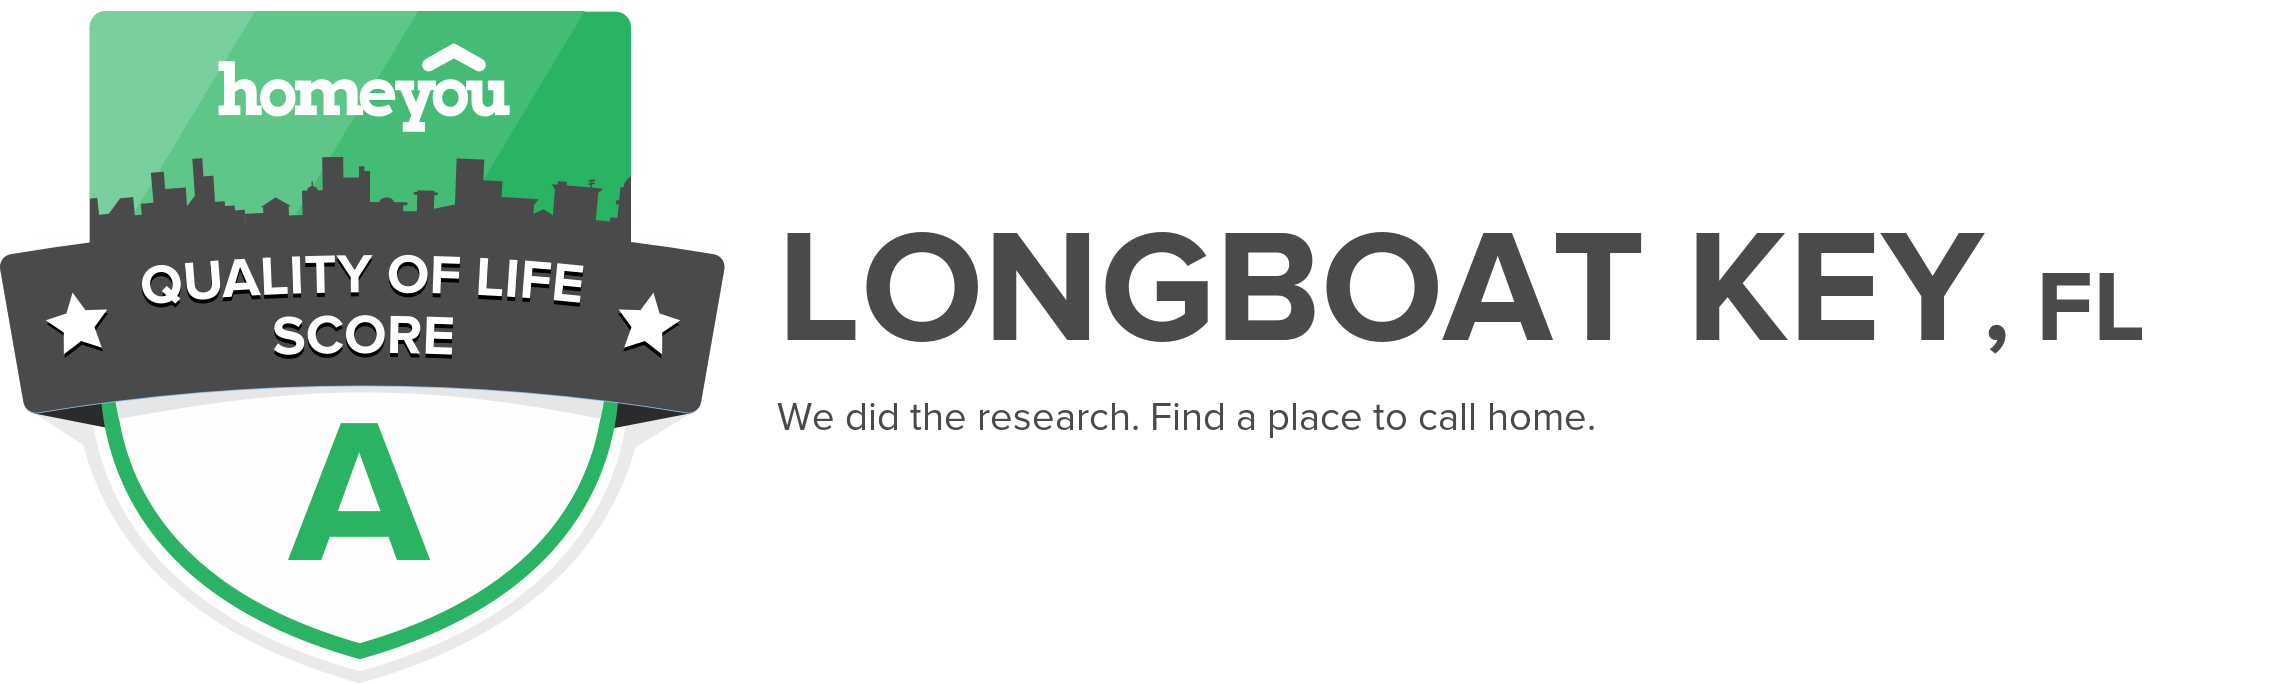 Longboat Key, FL